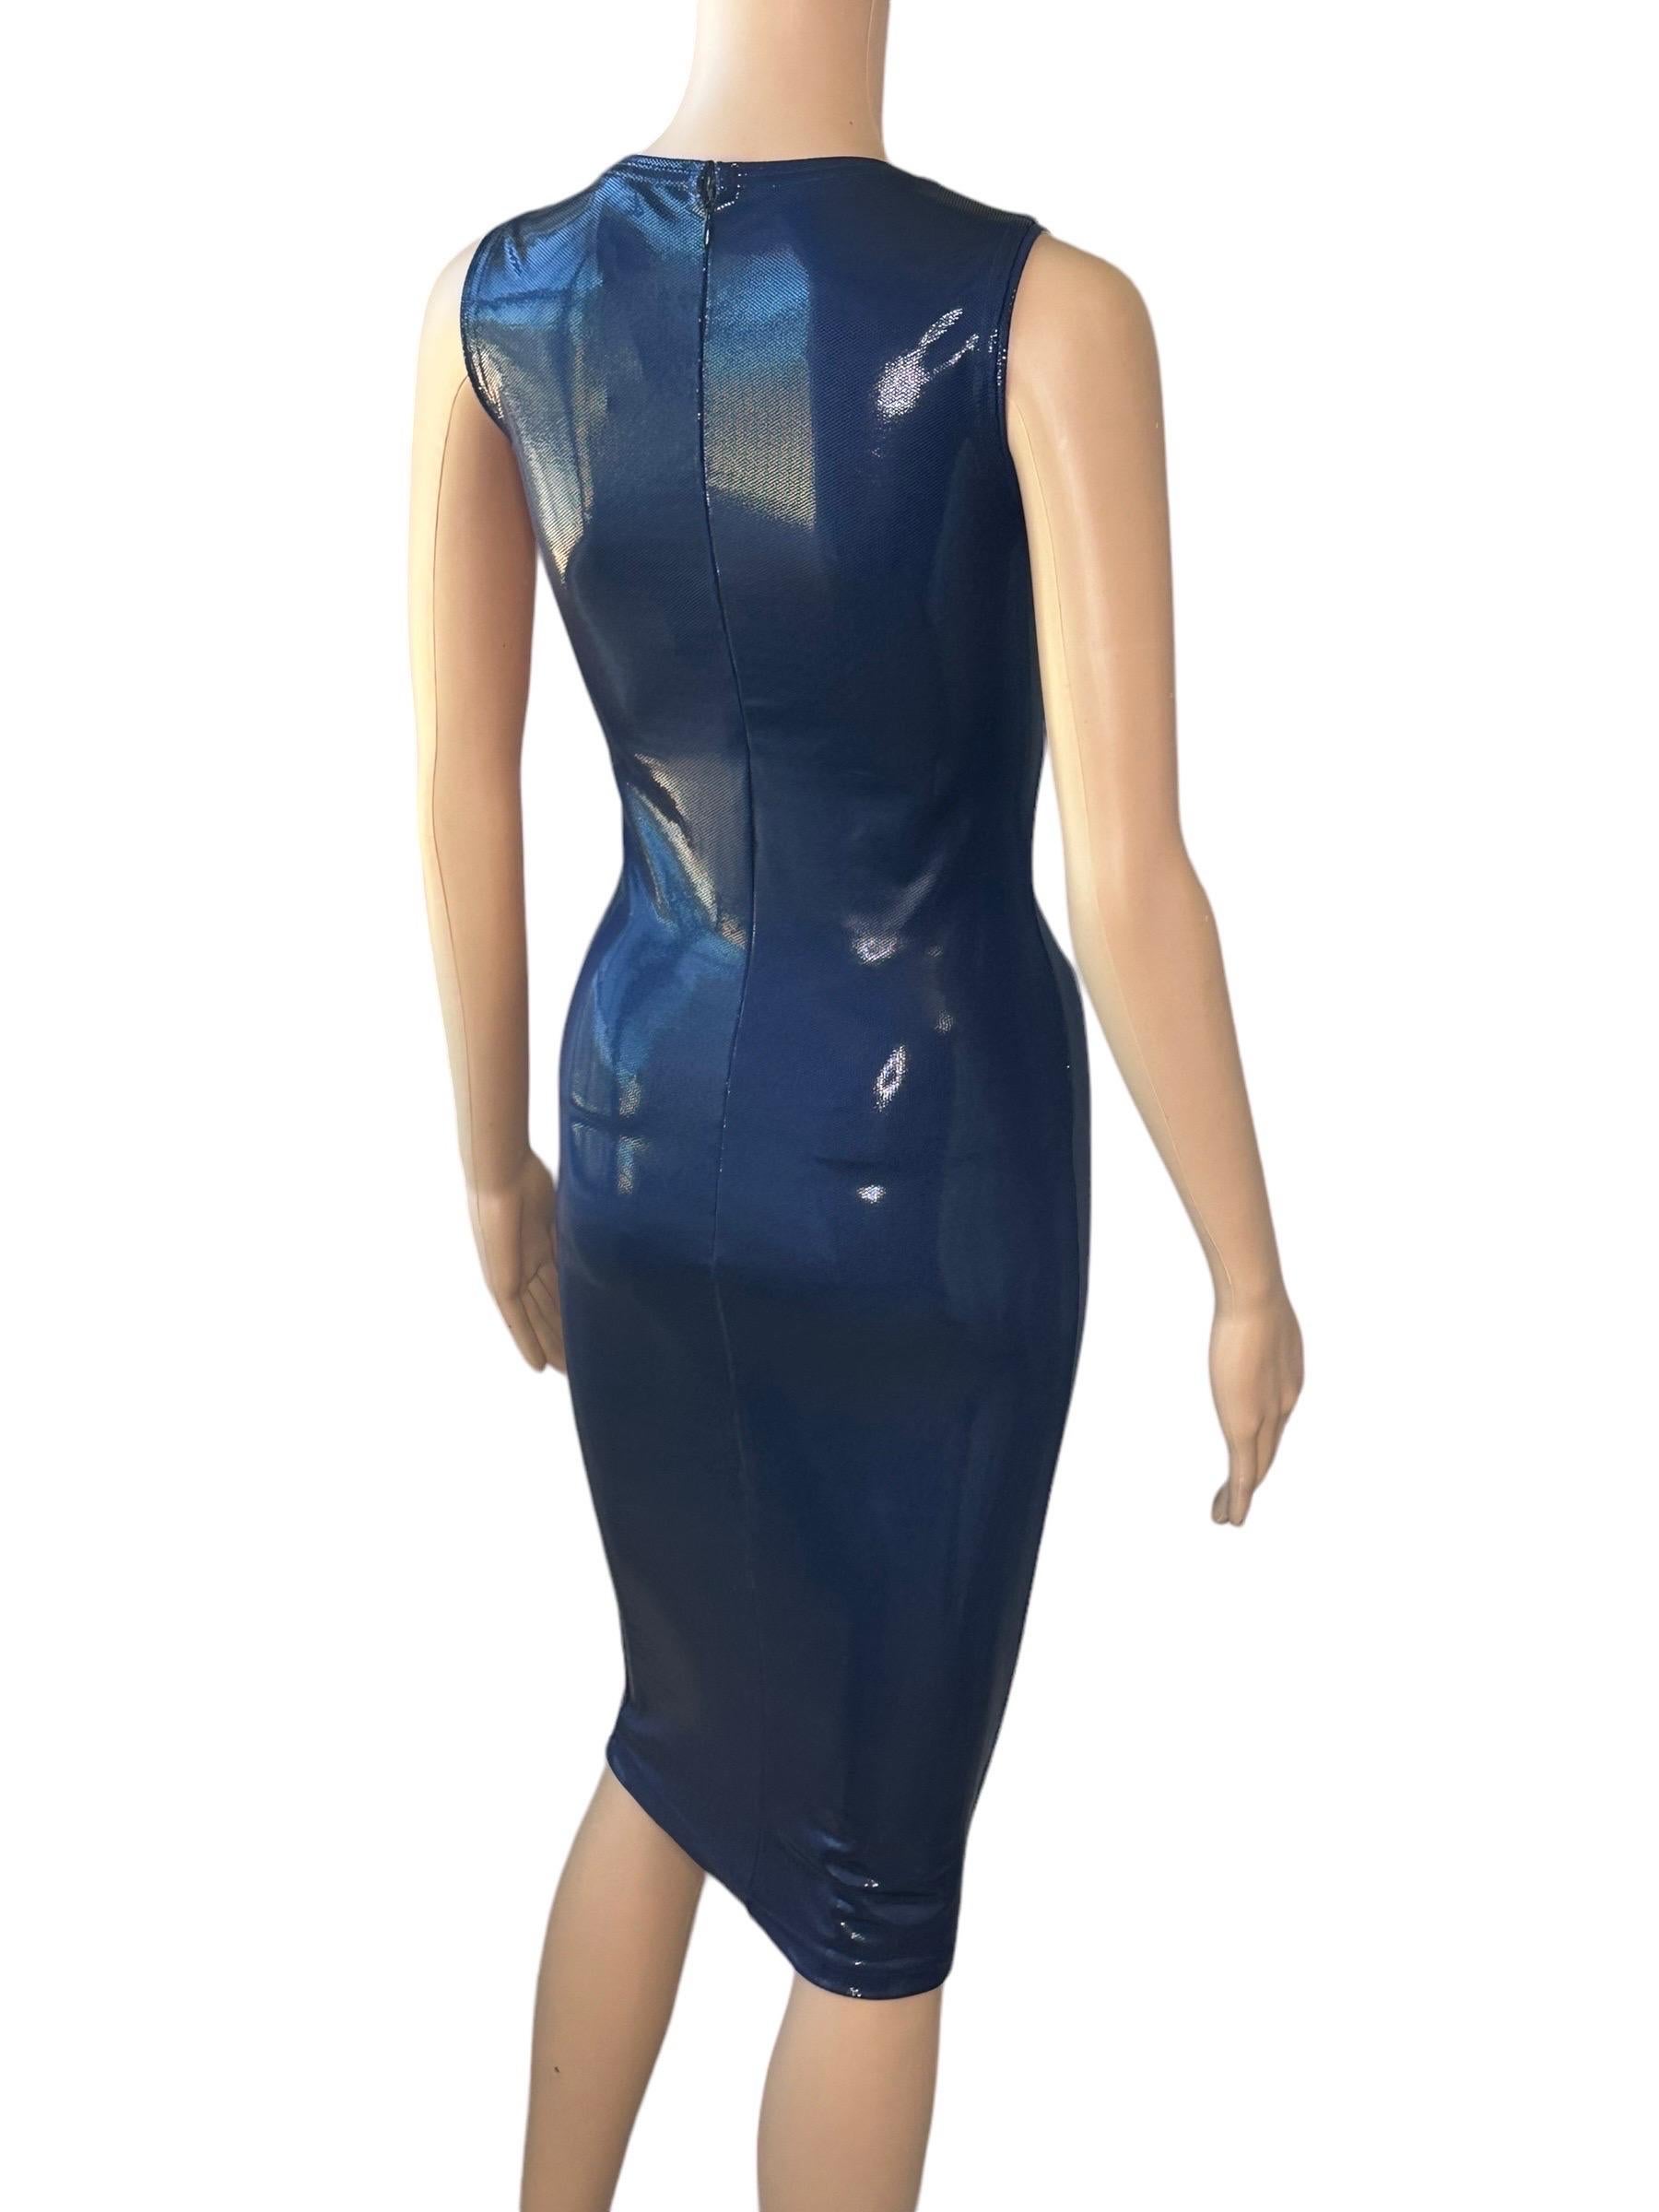 Gianni Versace c. 1994 Vintage Wet Look Stretch Bodycon Navy Blue Midi Dress 1